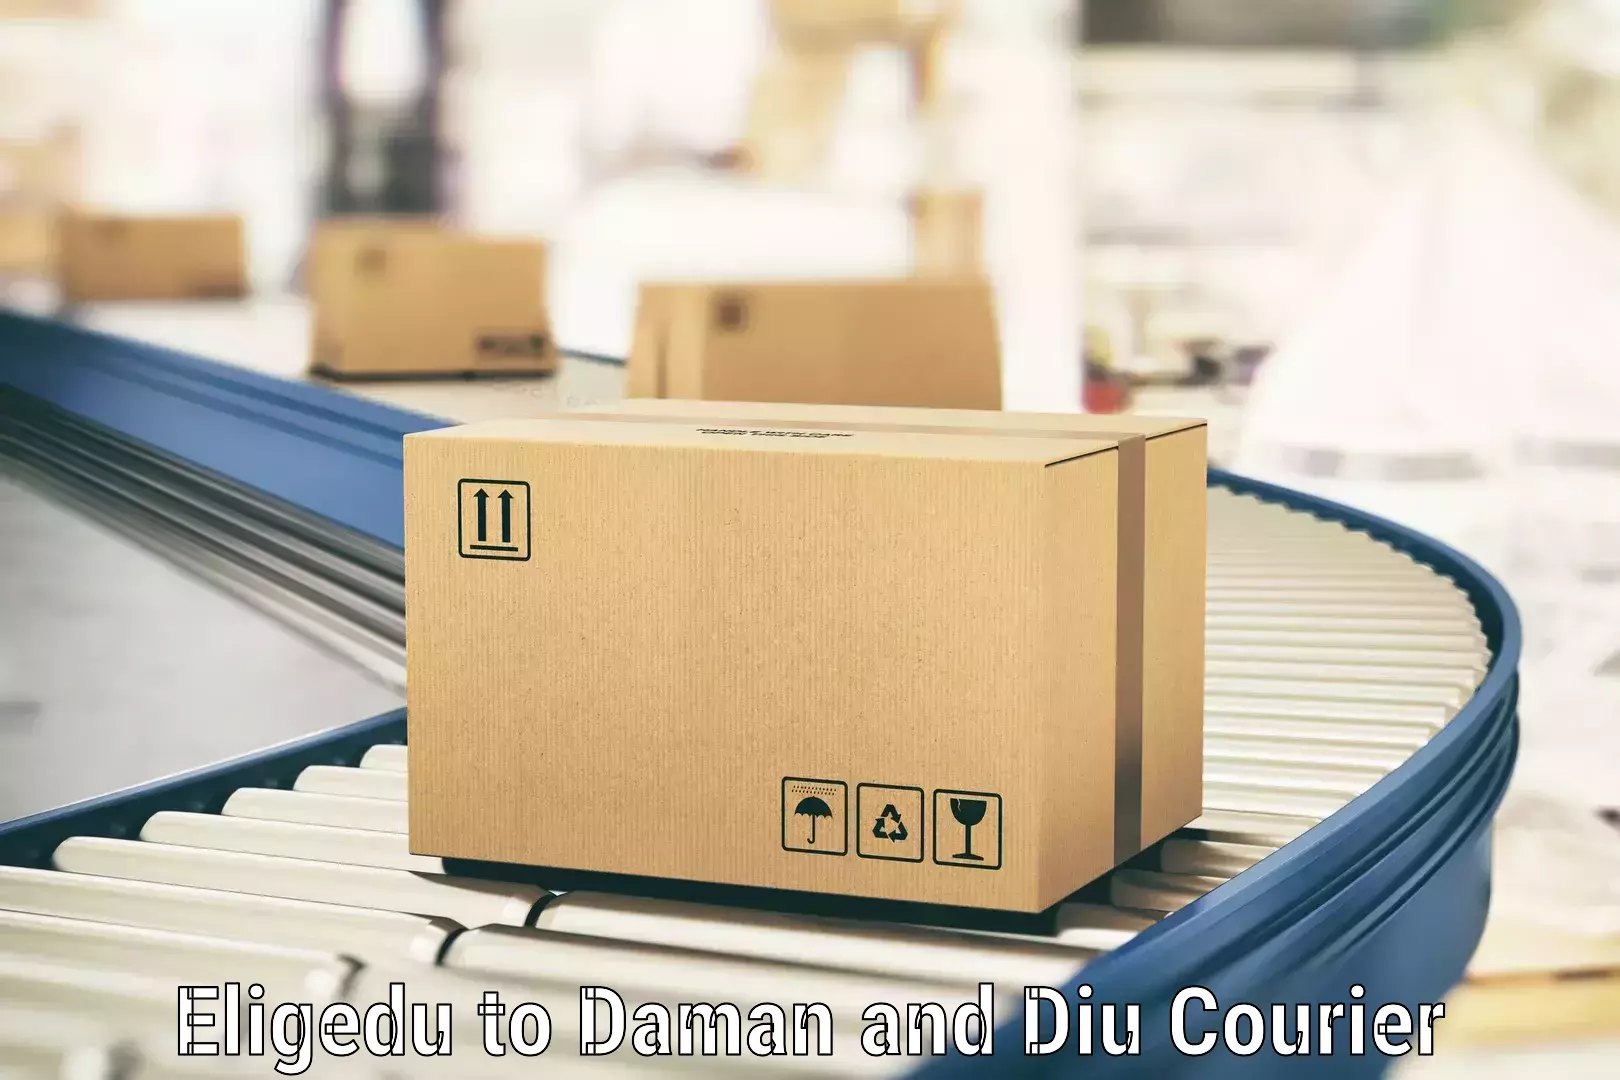 Express package handling in Eligedu to Daman and Diu